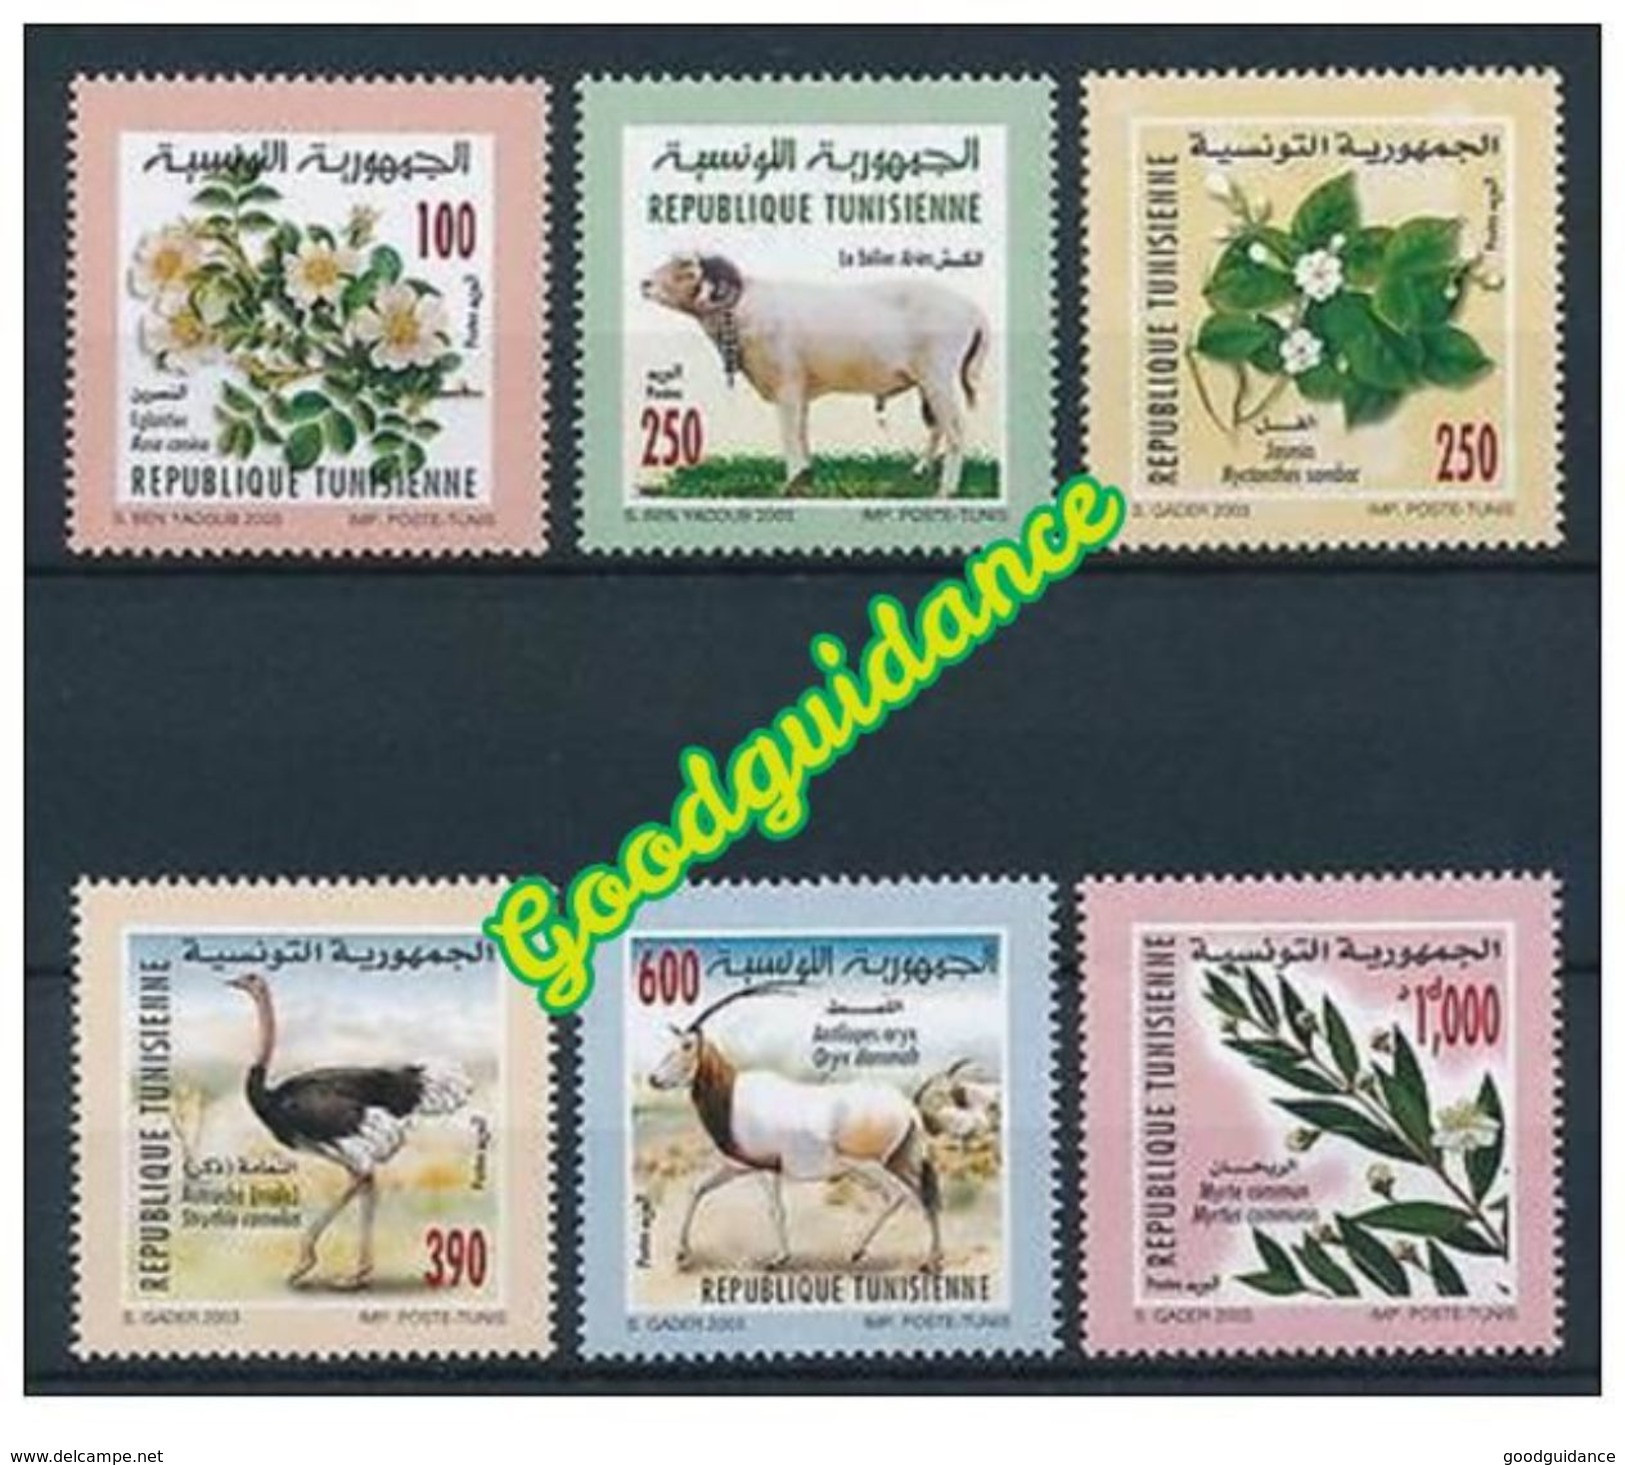 2003- Tunisia- Fauna And Flora: Wild Dog Rose, Jasmine, Ram, Ostrich, Antelope Oryx, Myrtle- Complete Set 3v.MNH** - Tunisia